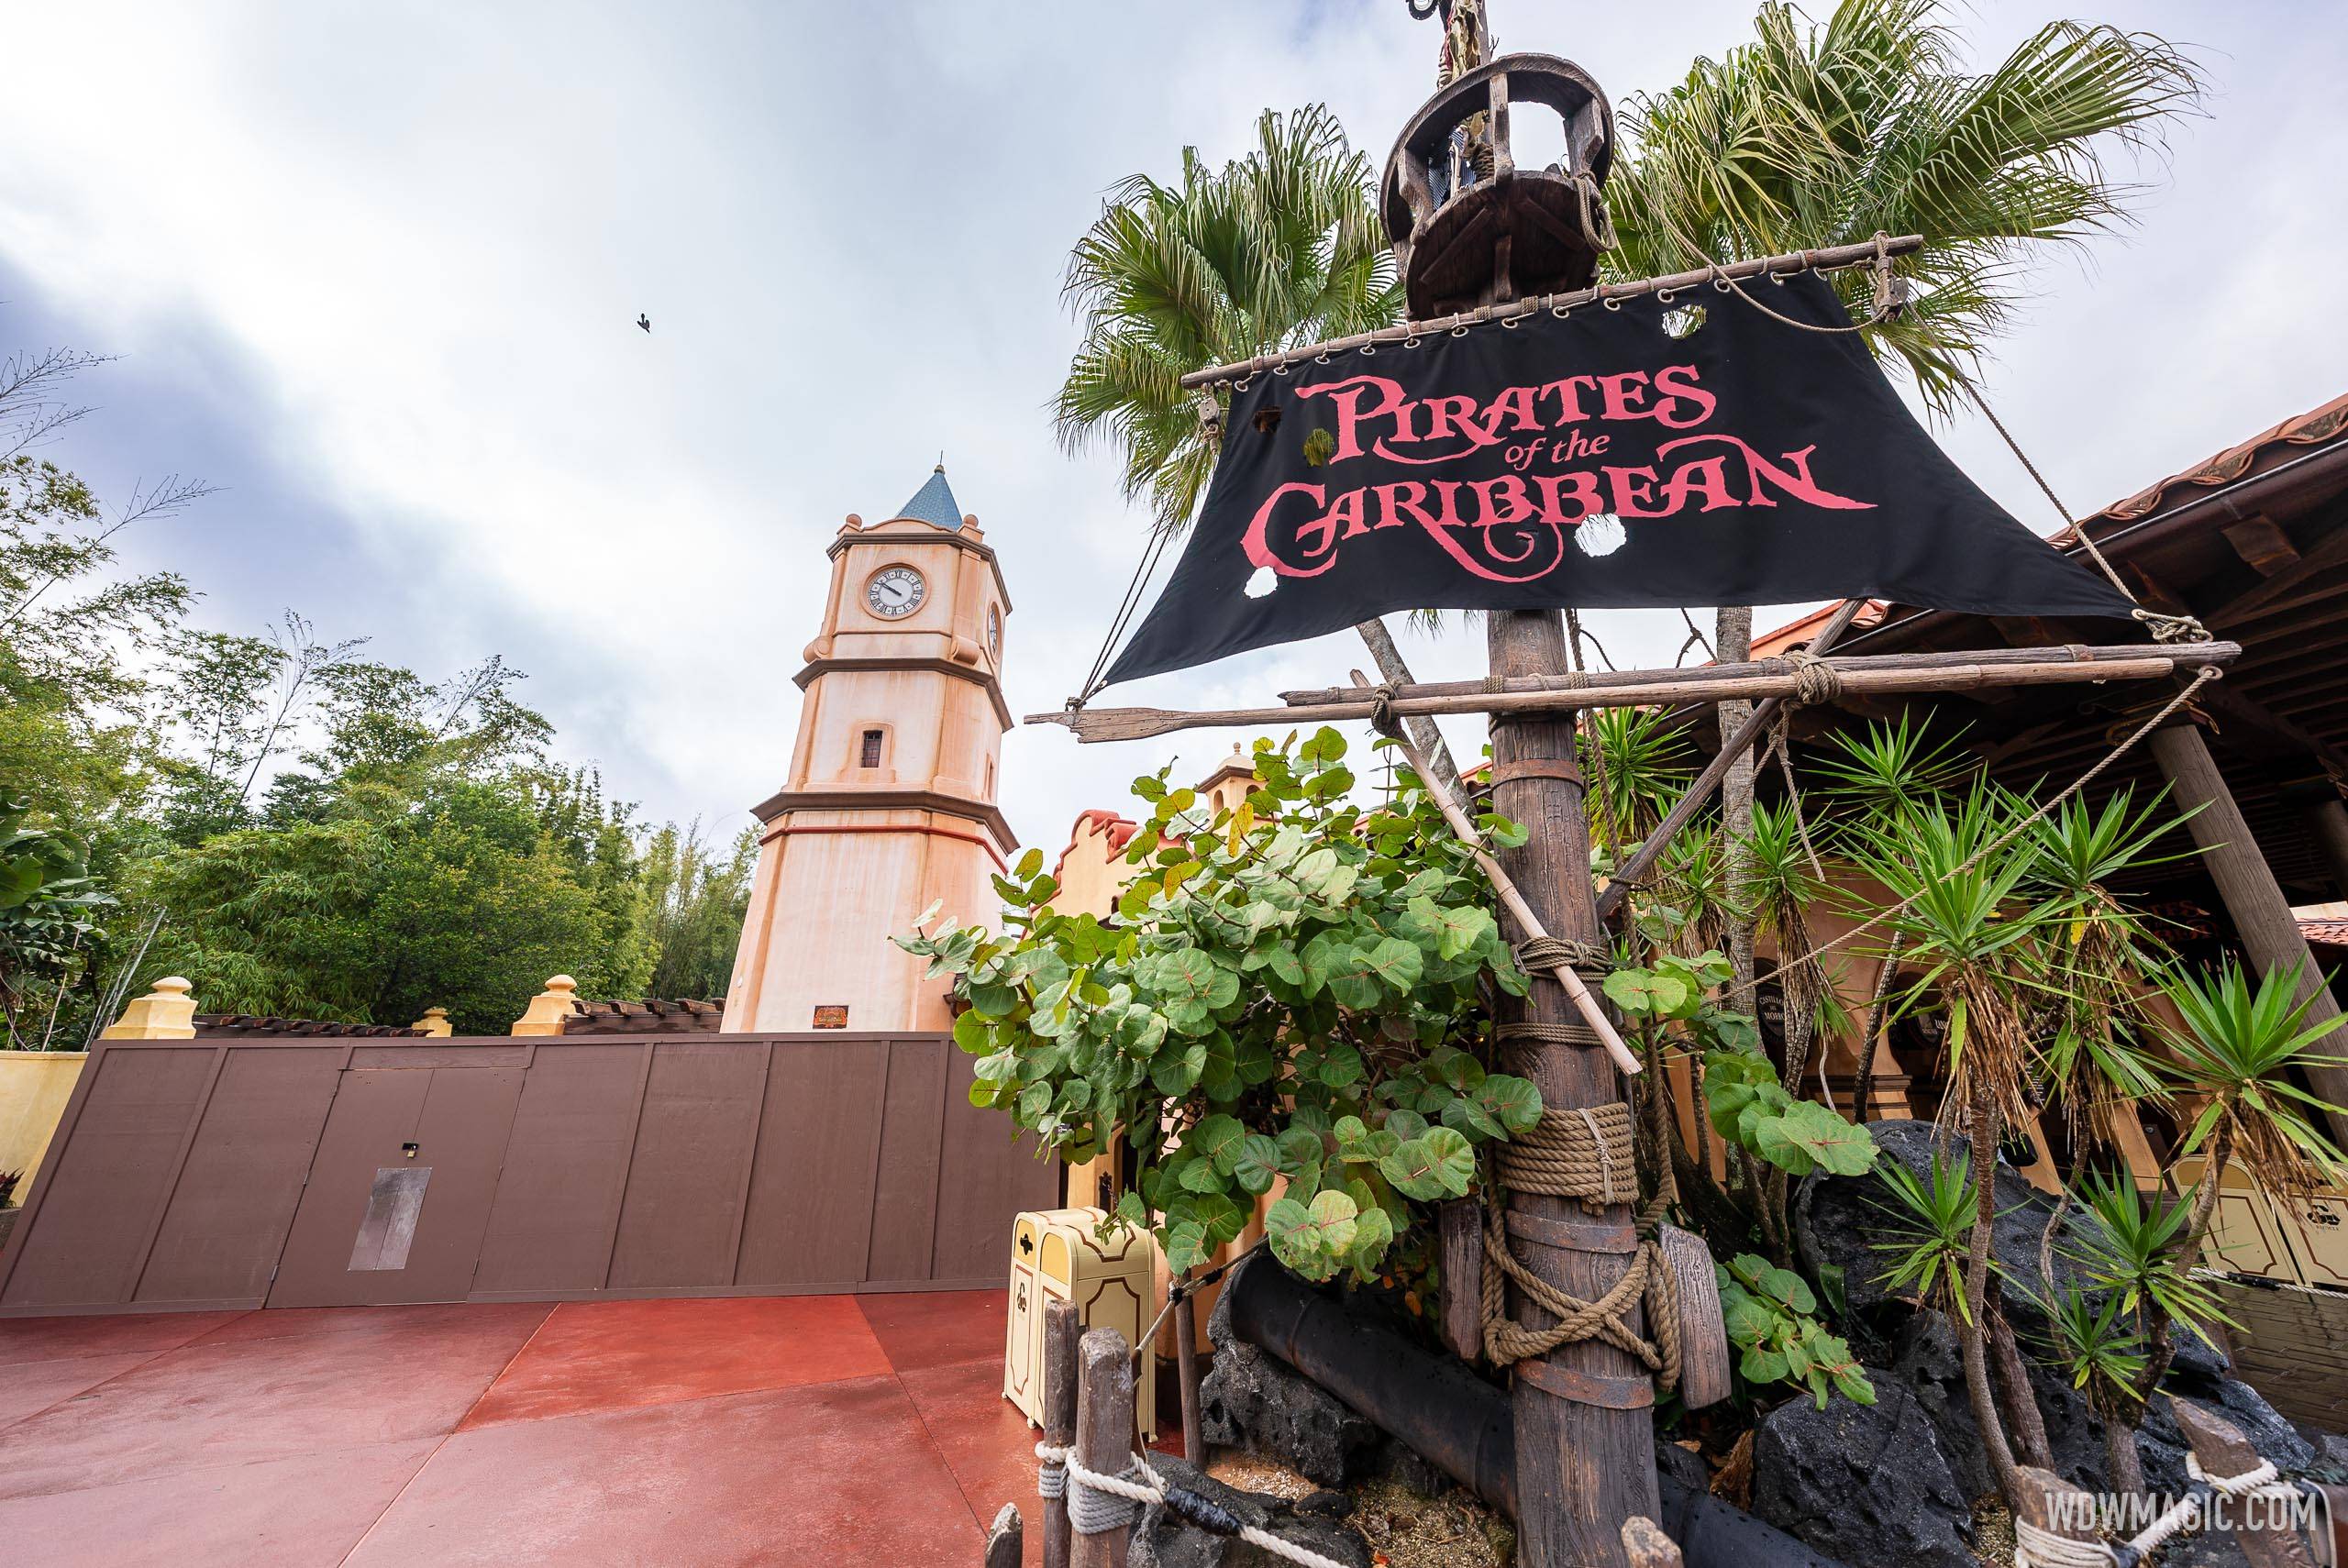 Refurbishment walls up around Pirates of the Caribbean at Magic Kingdom